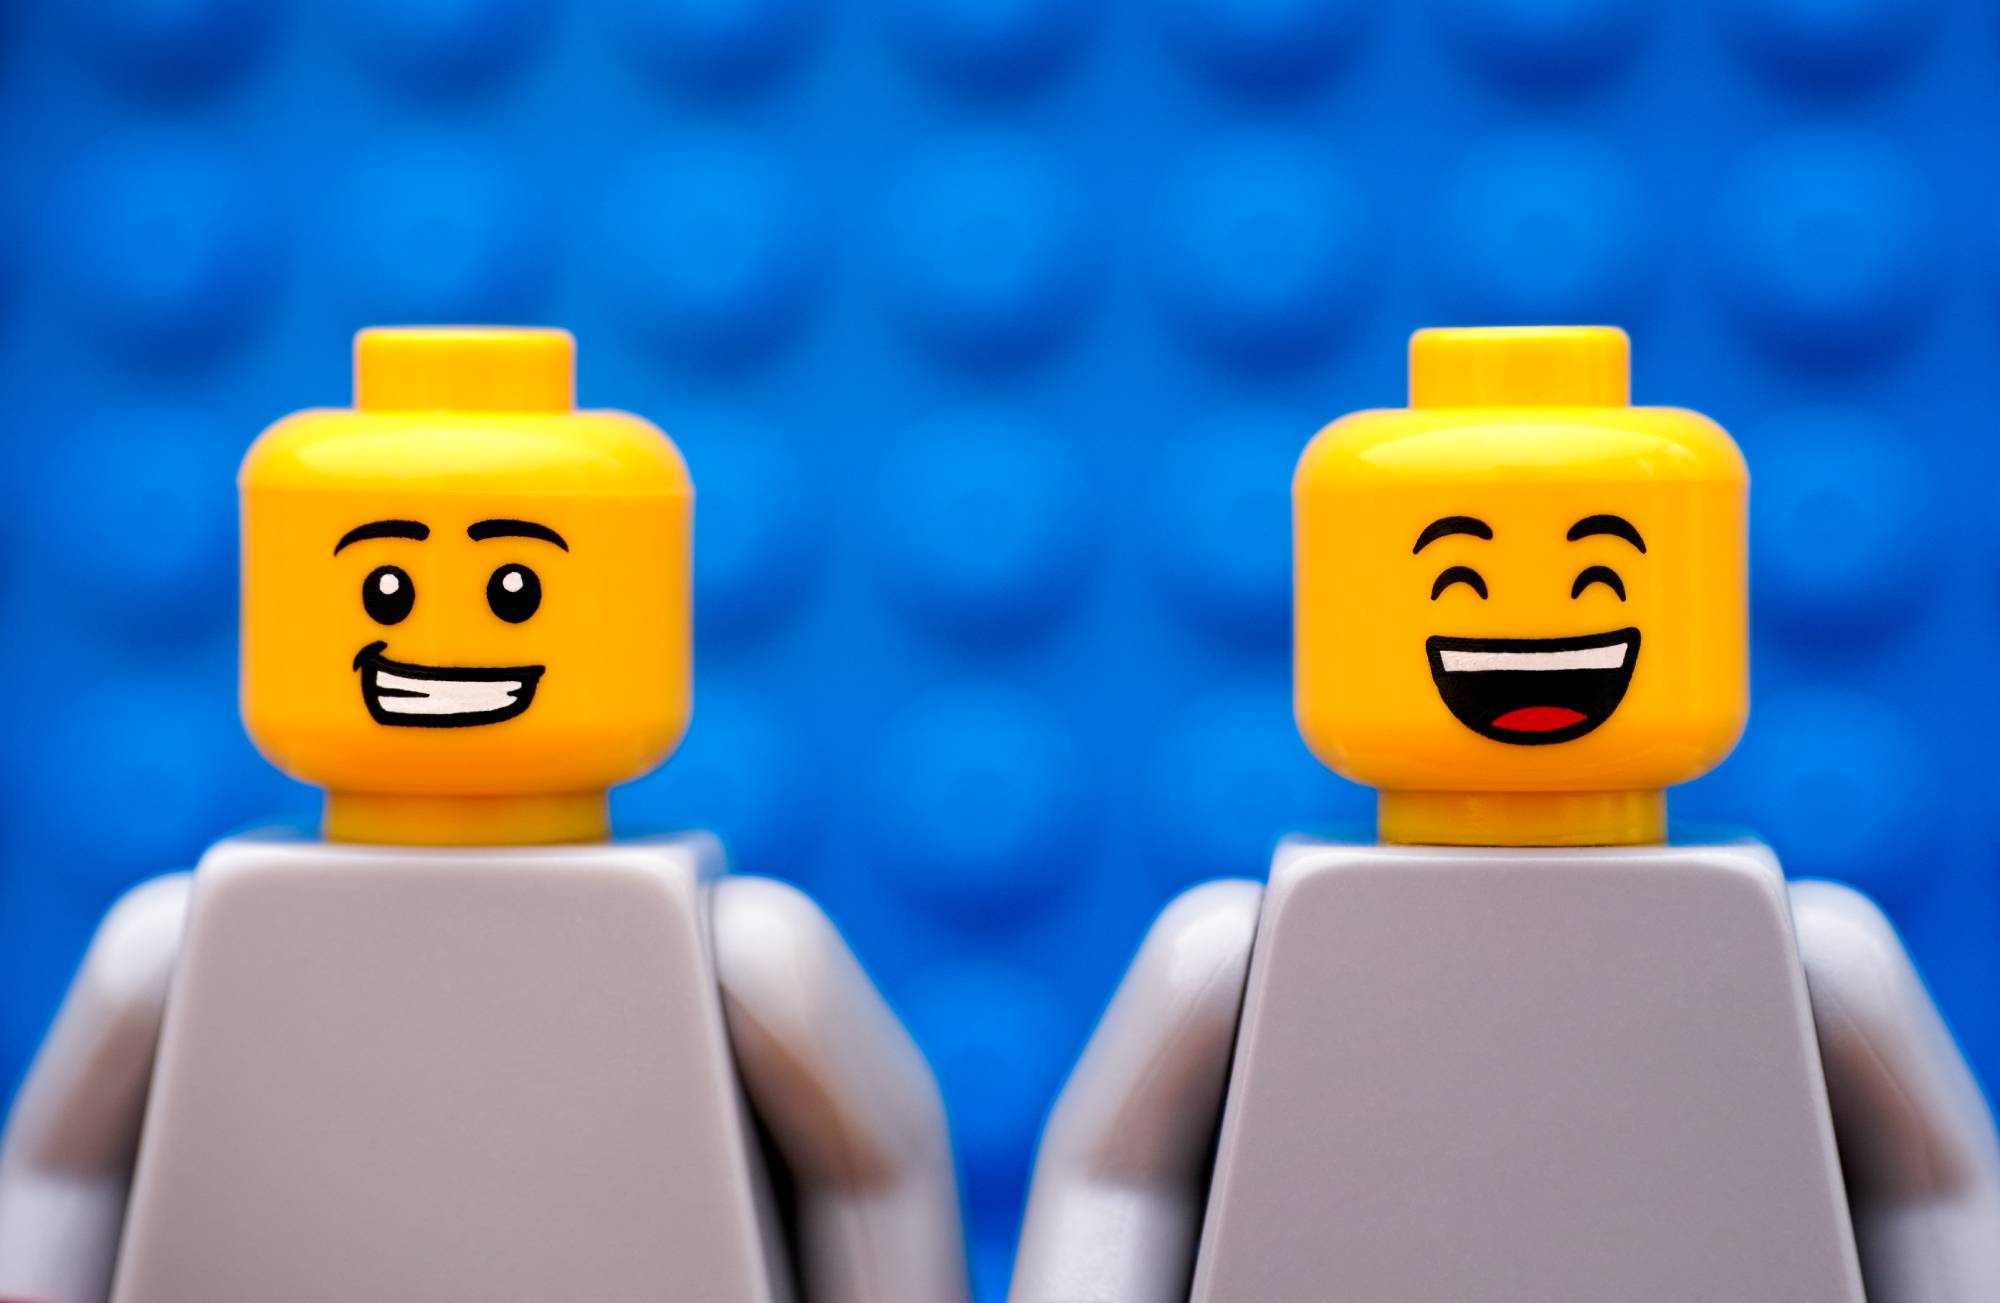 lego figures smiling